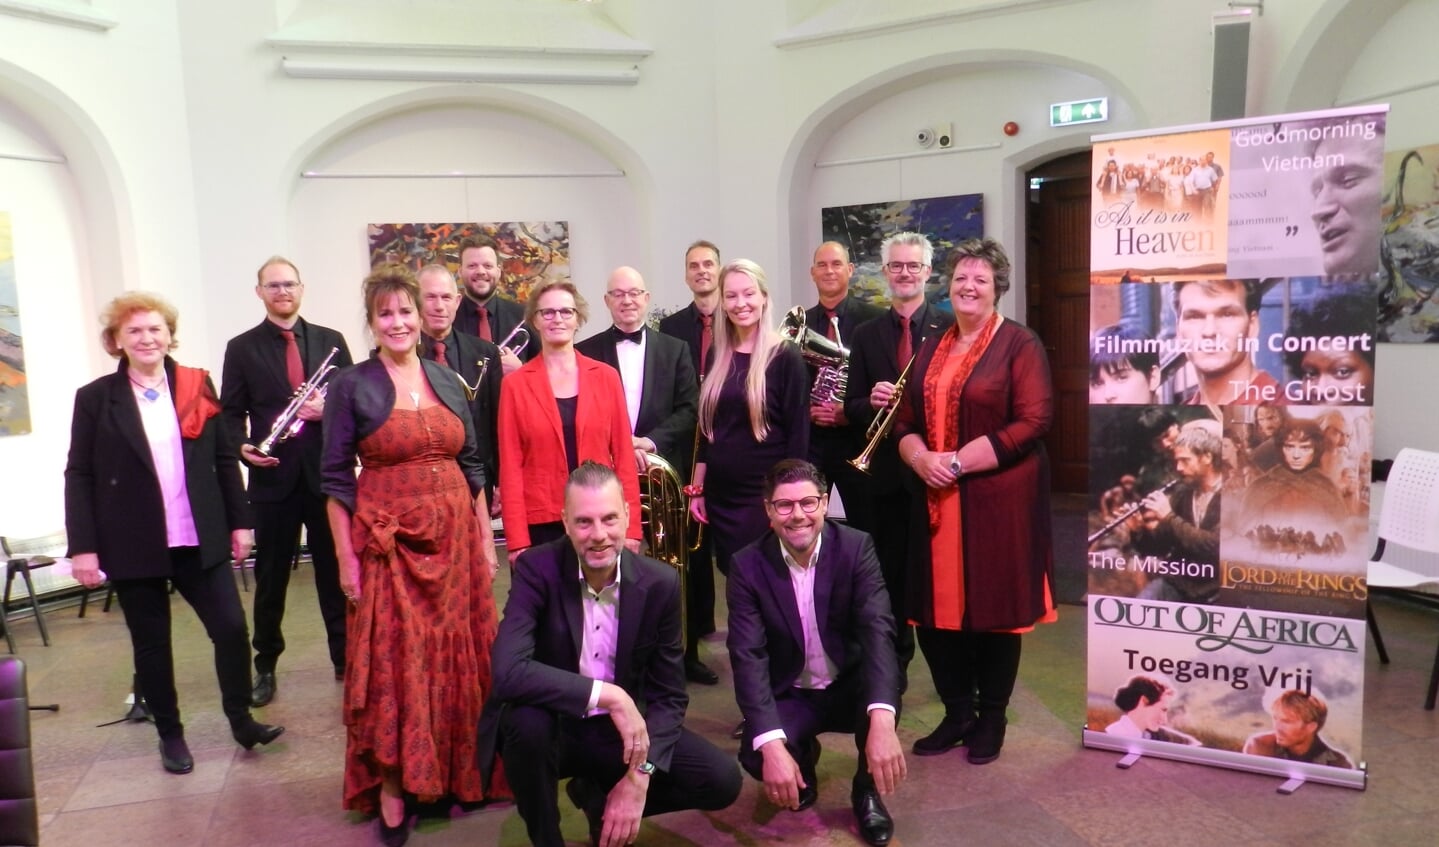 Muziekgroep Music and More, Brass Choir Nederland en Amici di Canto